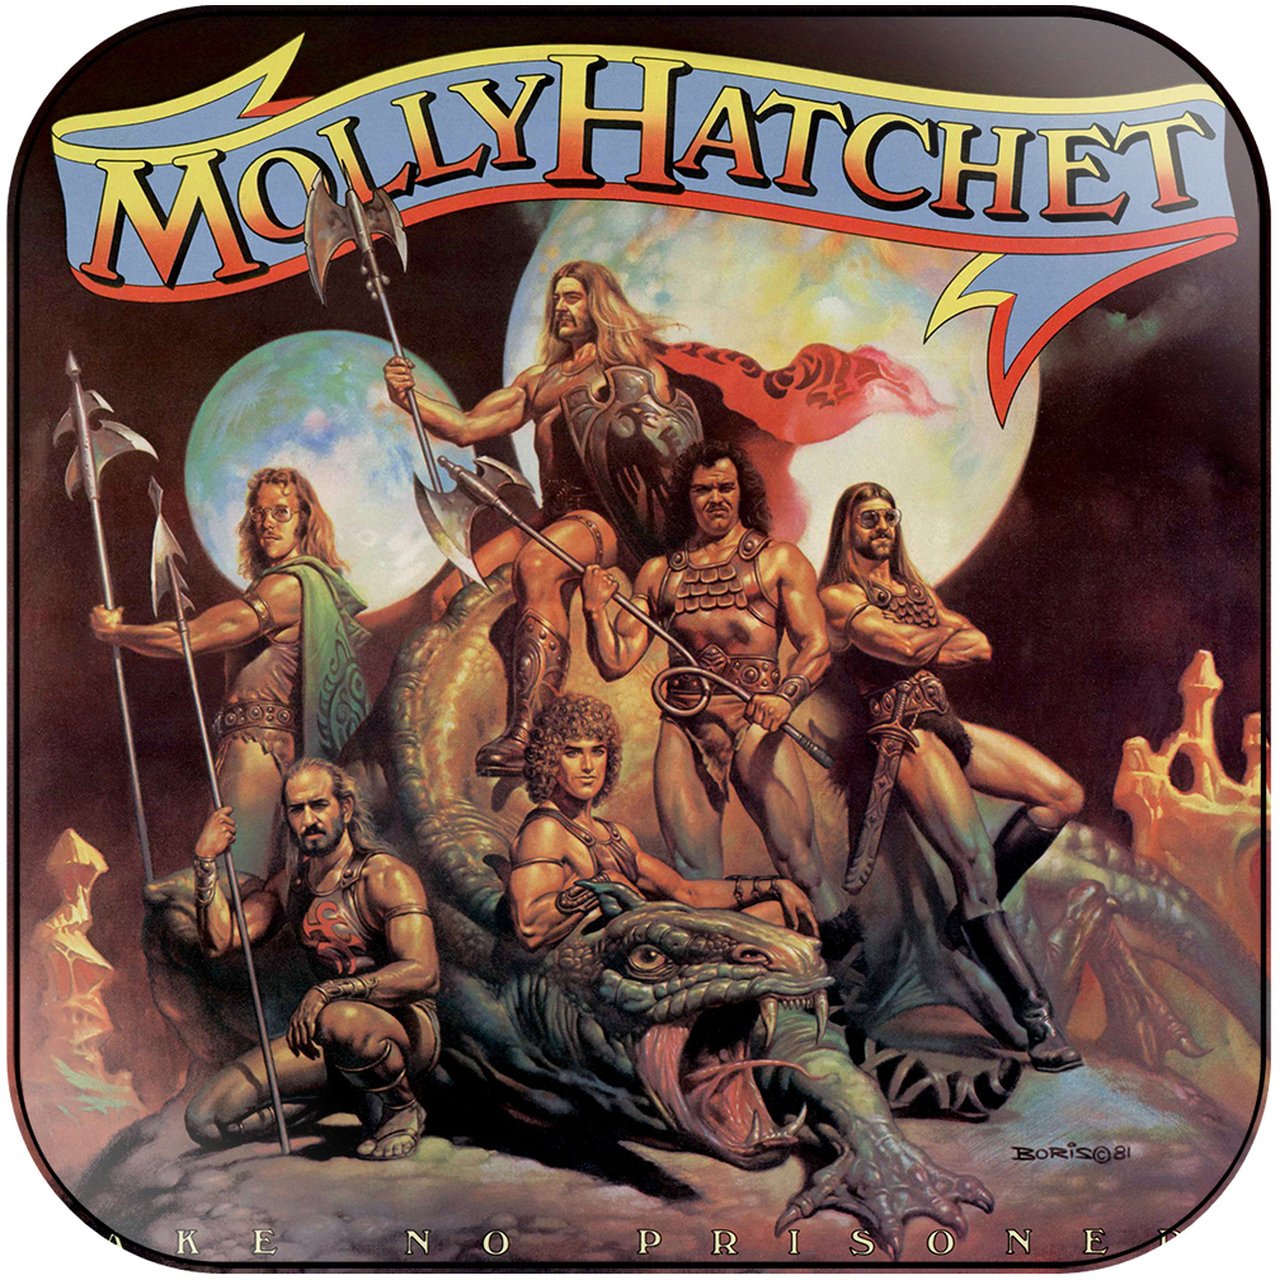 Molly Hatchet Take No Prisoners Album Cover Sticker